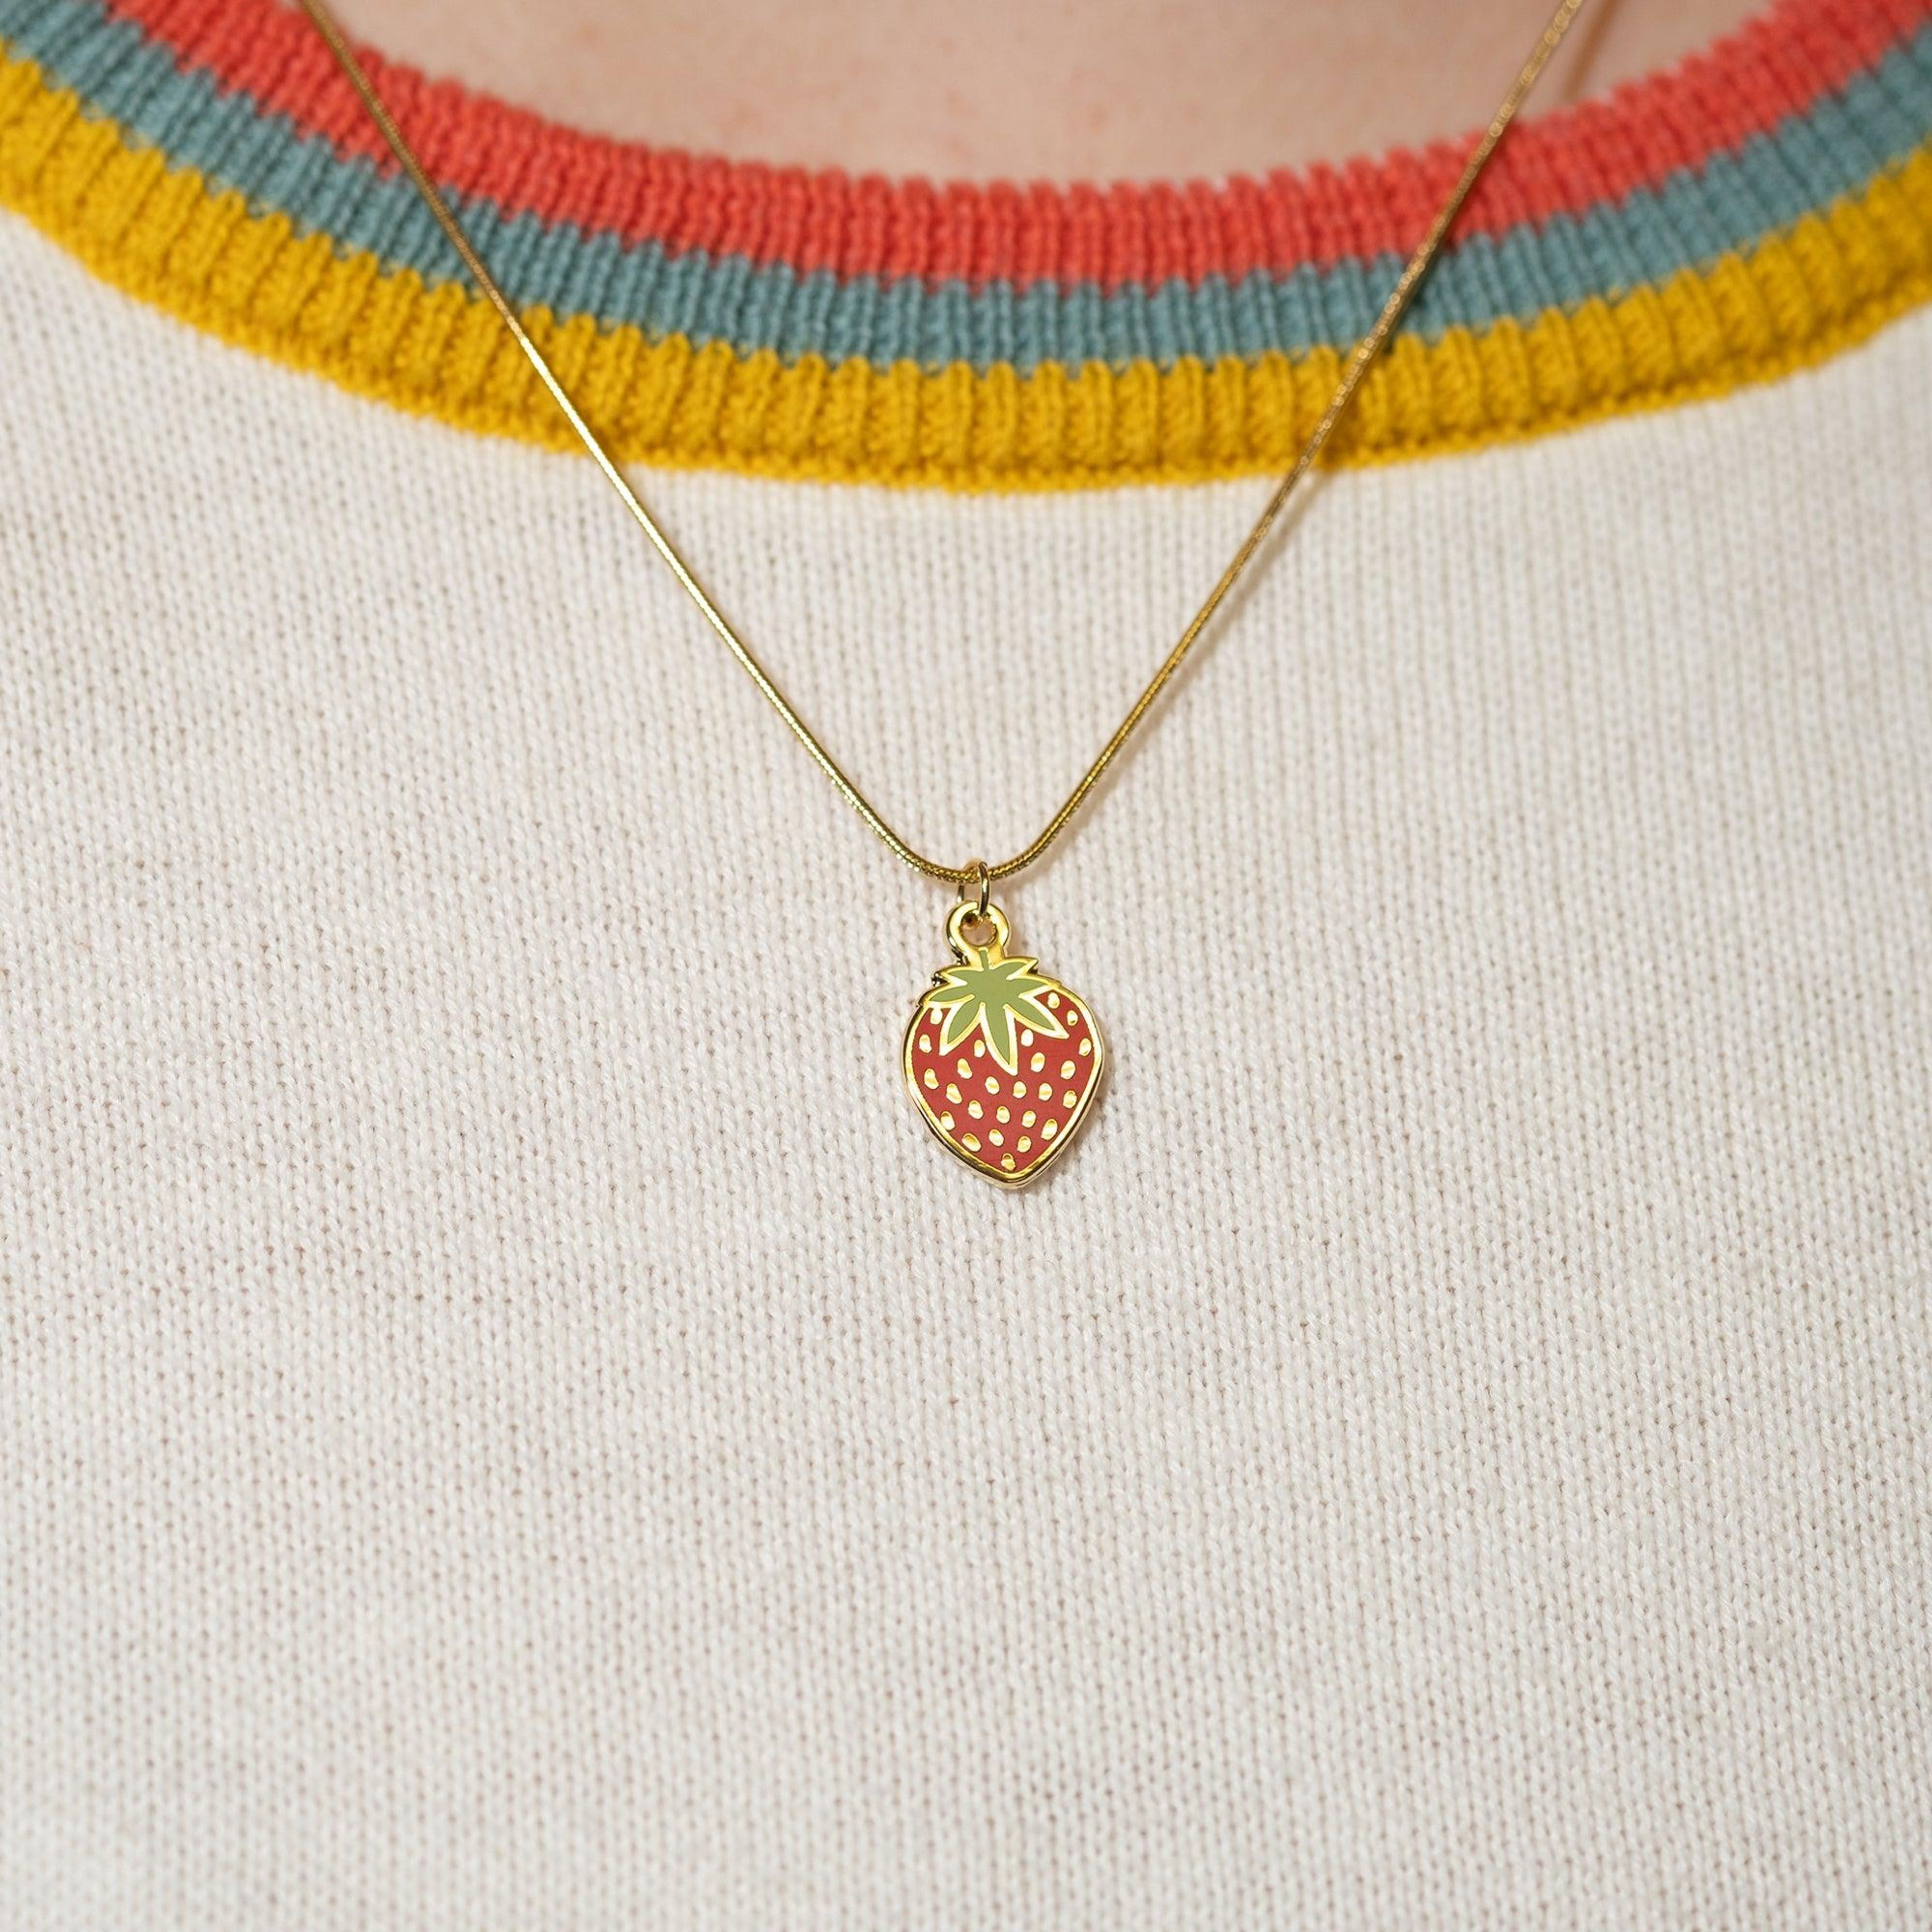 Strawberry Charm Necklace